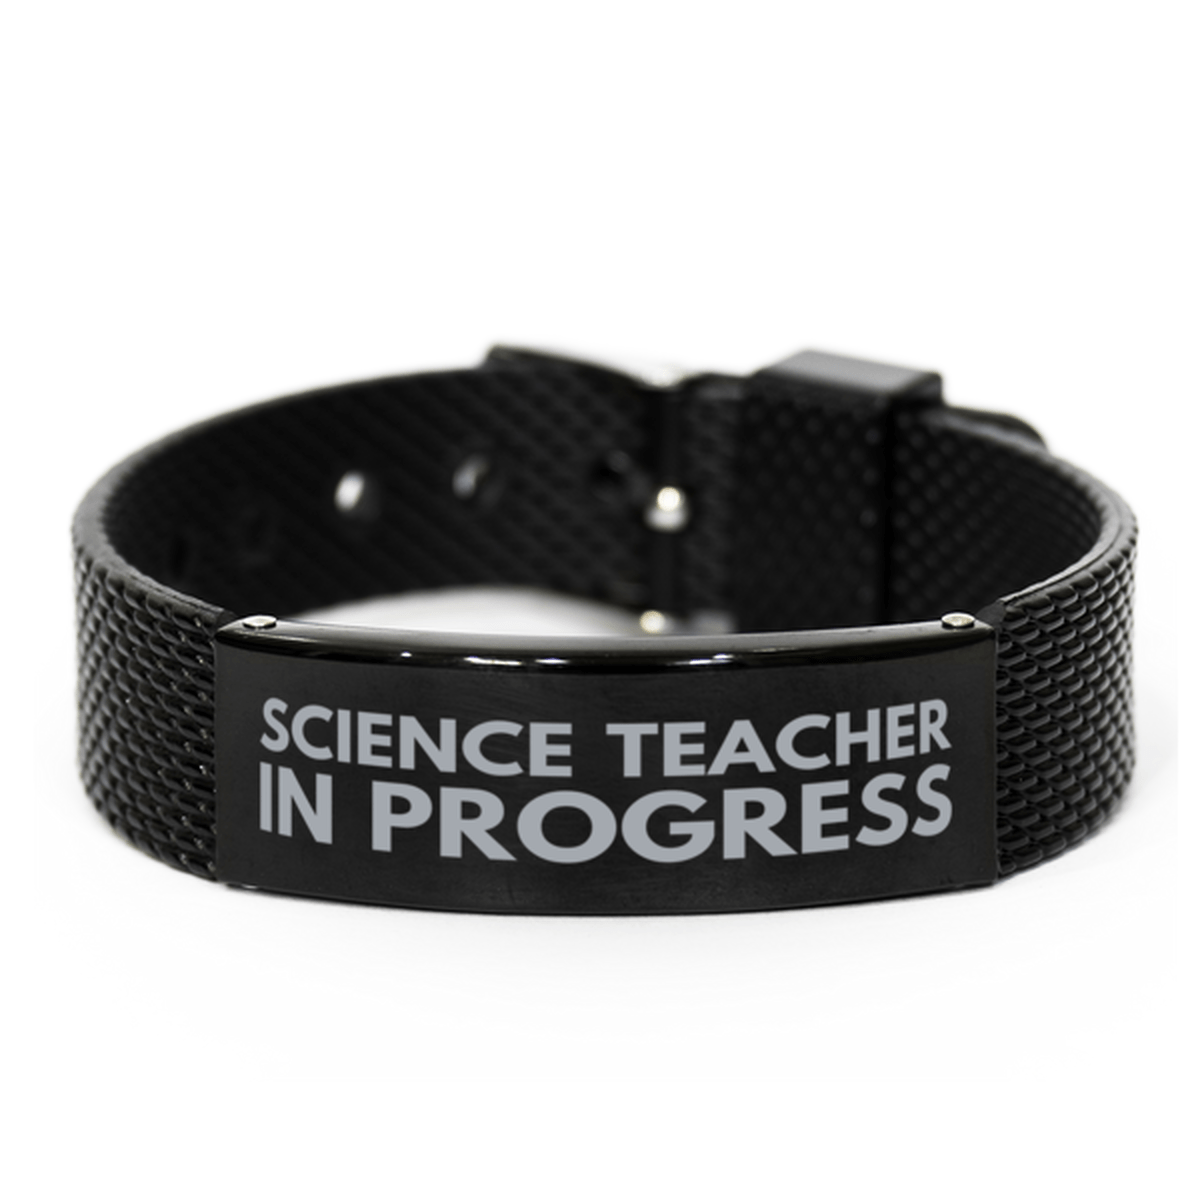 Inspirational Science Teacher Black Shark Mesh Bracelet, Science Teacher In Progress, Best Graduation Gifts for Students